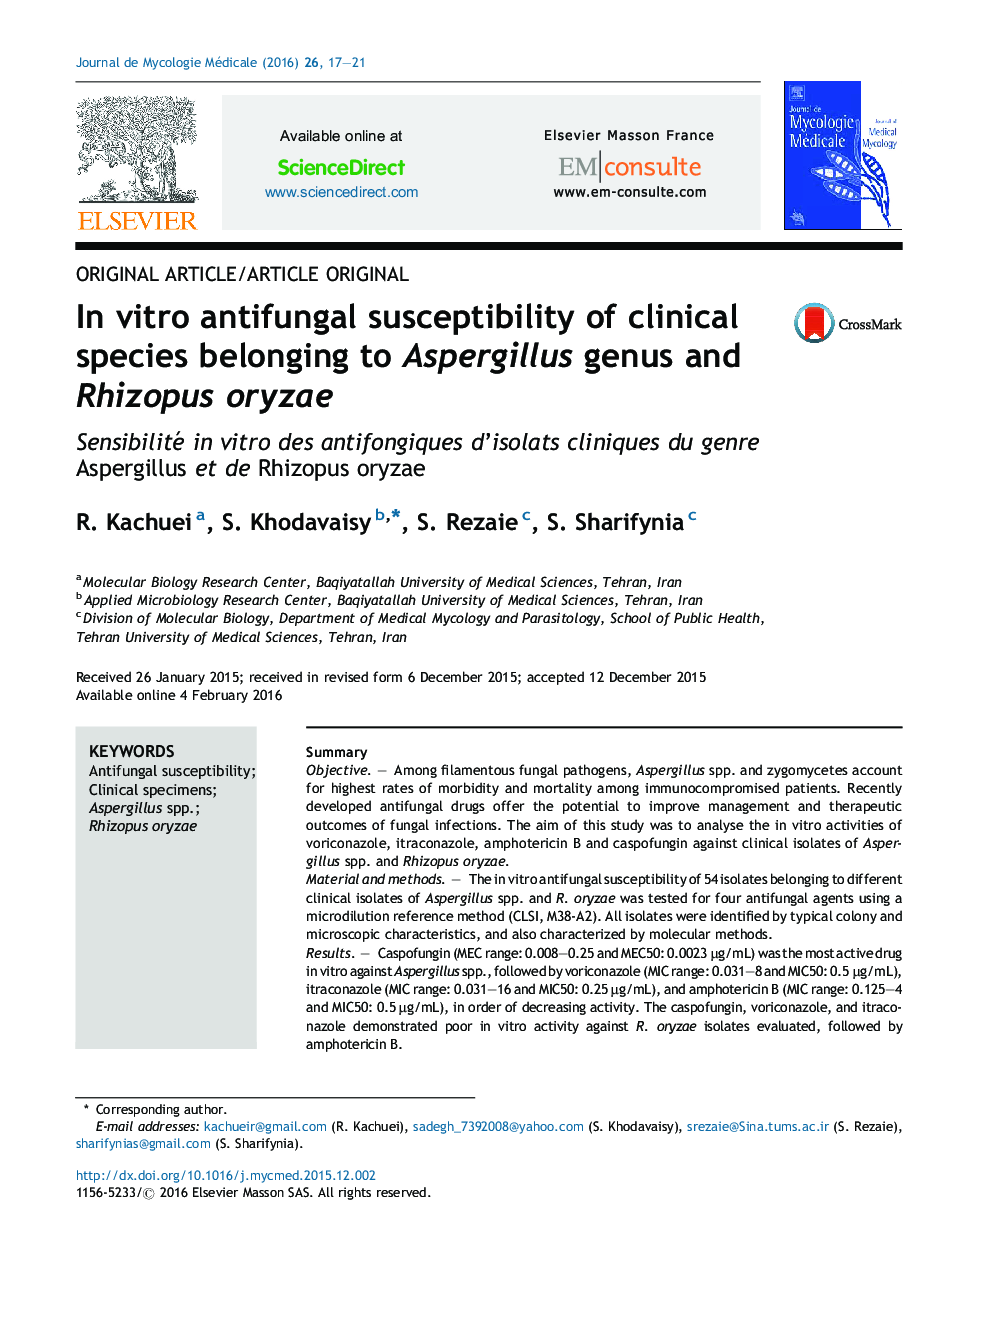 In vitro antifungal susceptibility of clinical species belonging to Aspergillus genus and Rhizopus oryzae